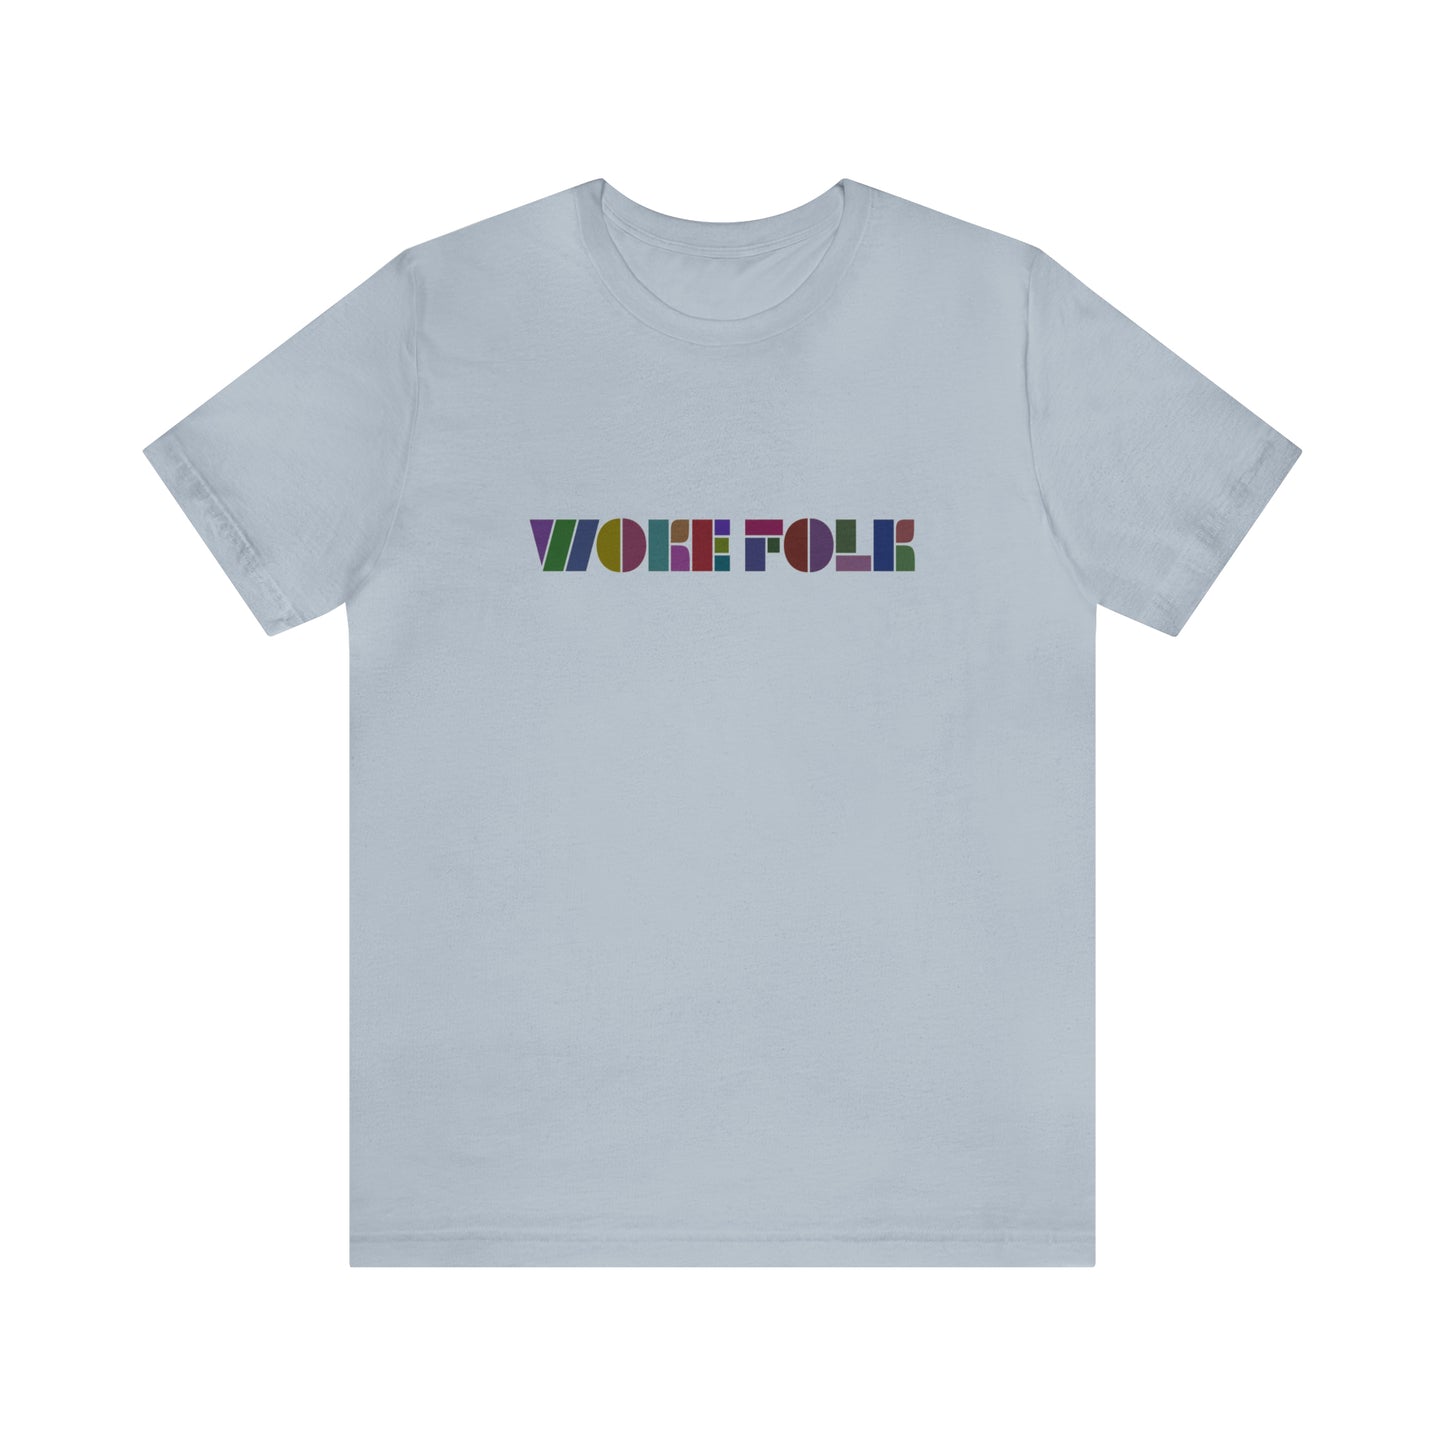 Woke Folk - Unisex T-Shirt